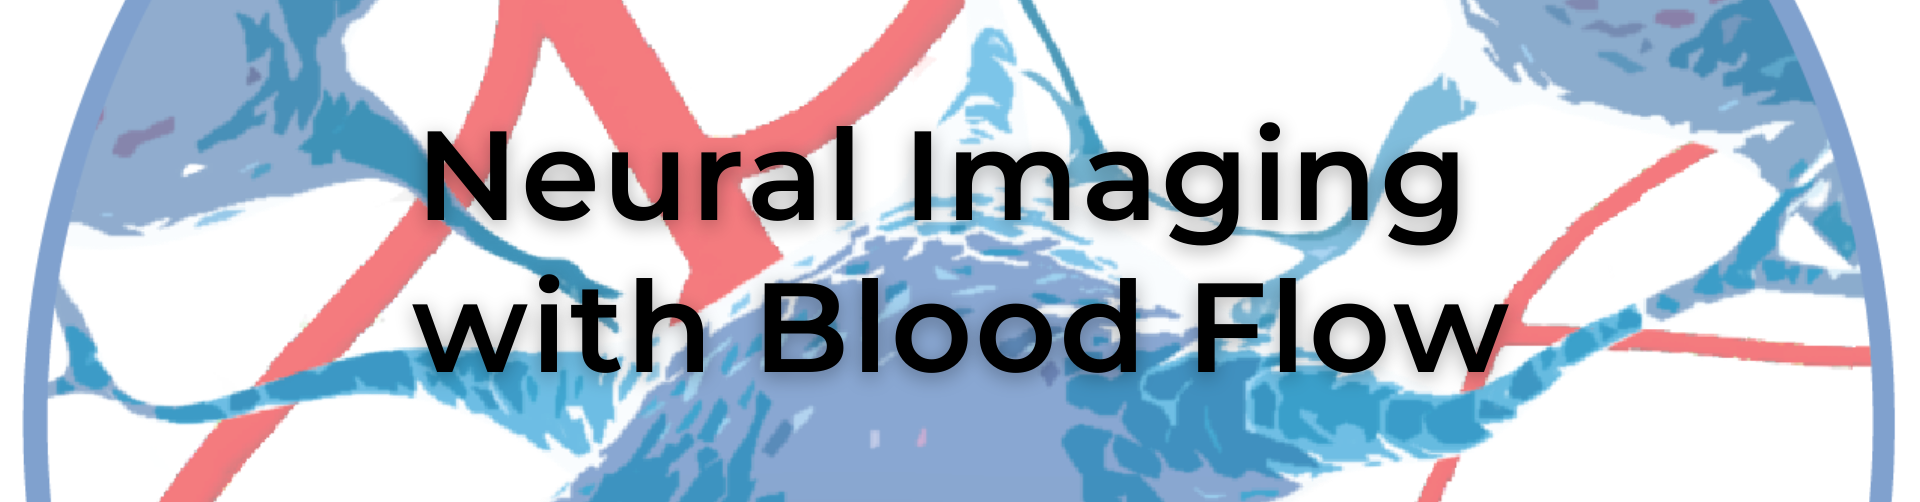 NEW_Blood Flow Imaging Landing Page BANNER